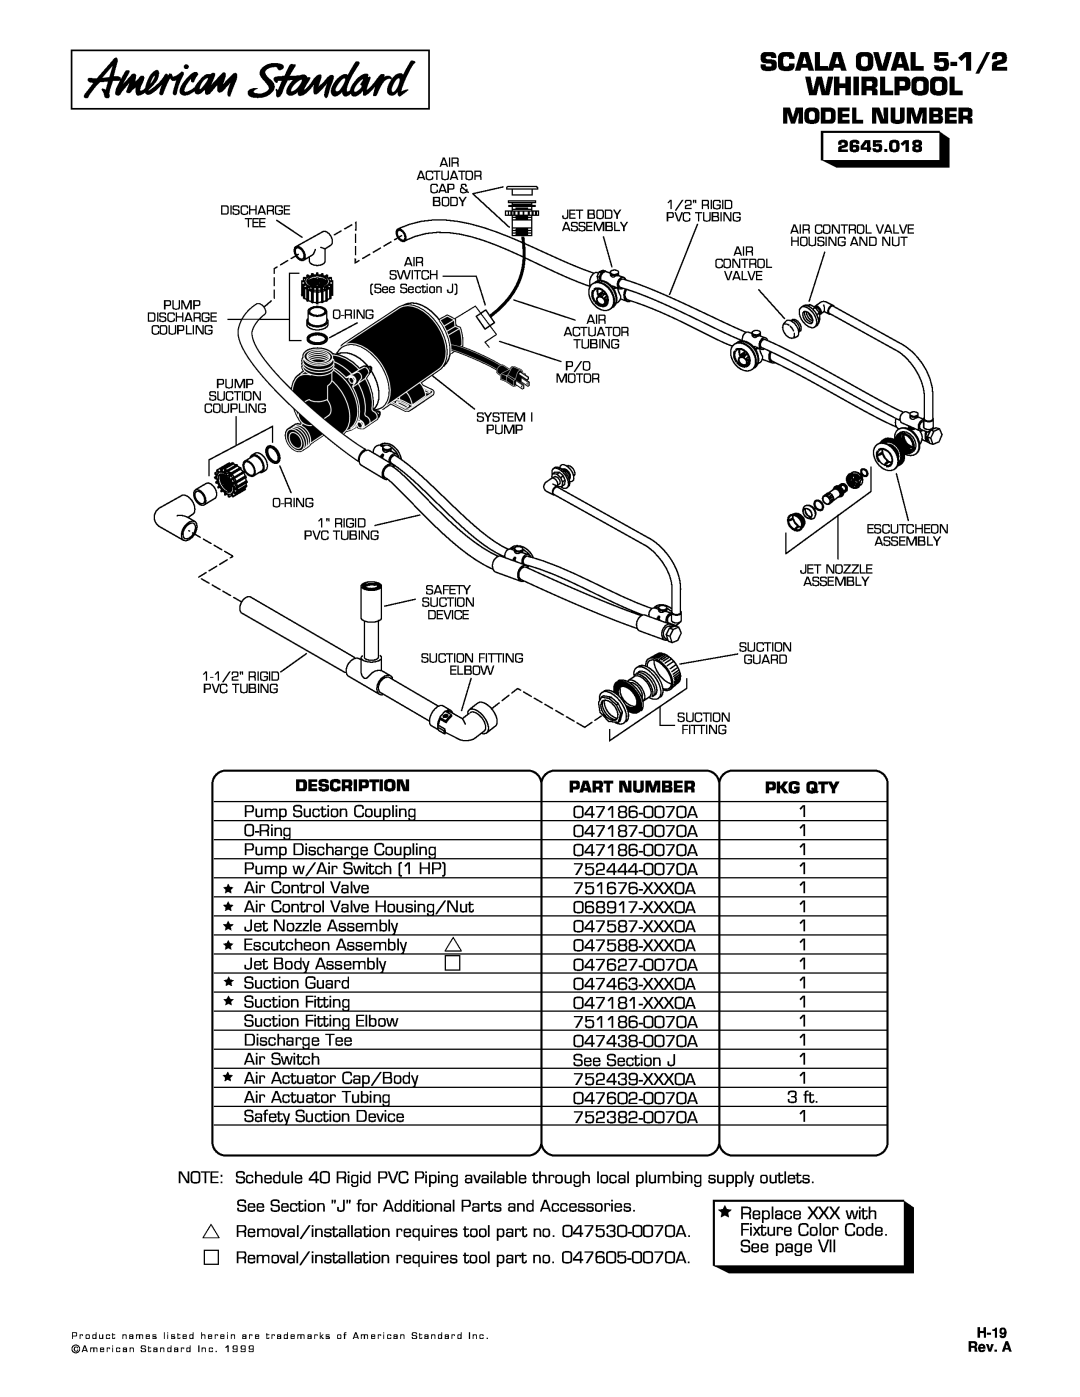 American Standard 2645.018 manual Whirlpool, Model Number, Description, Part Number 